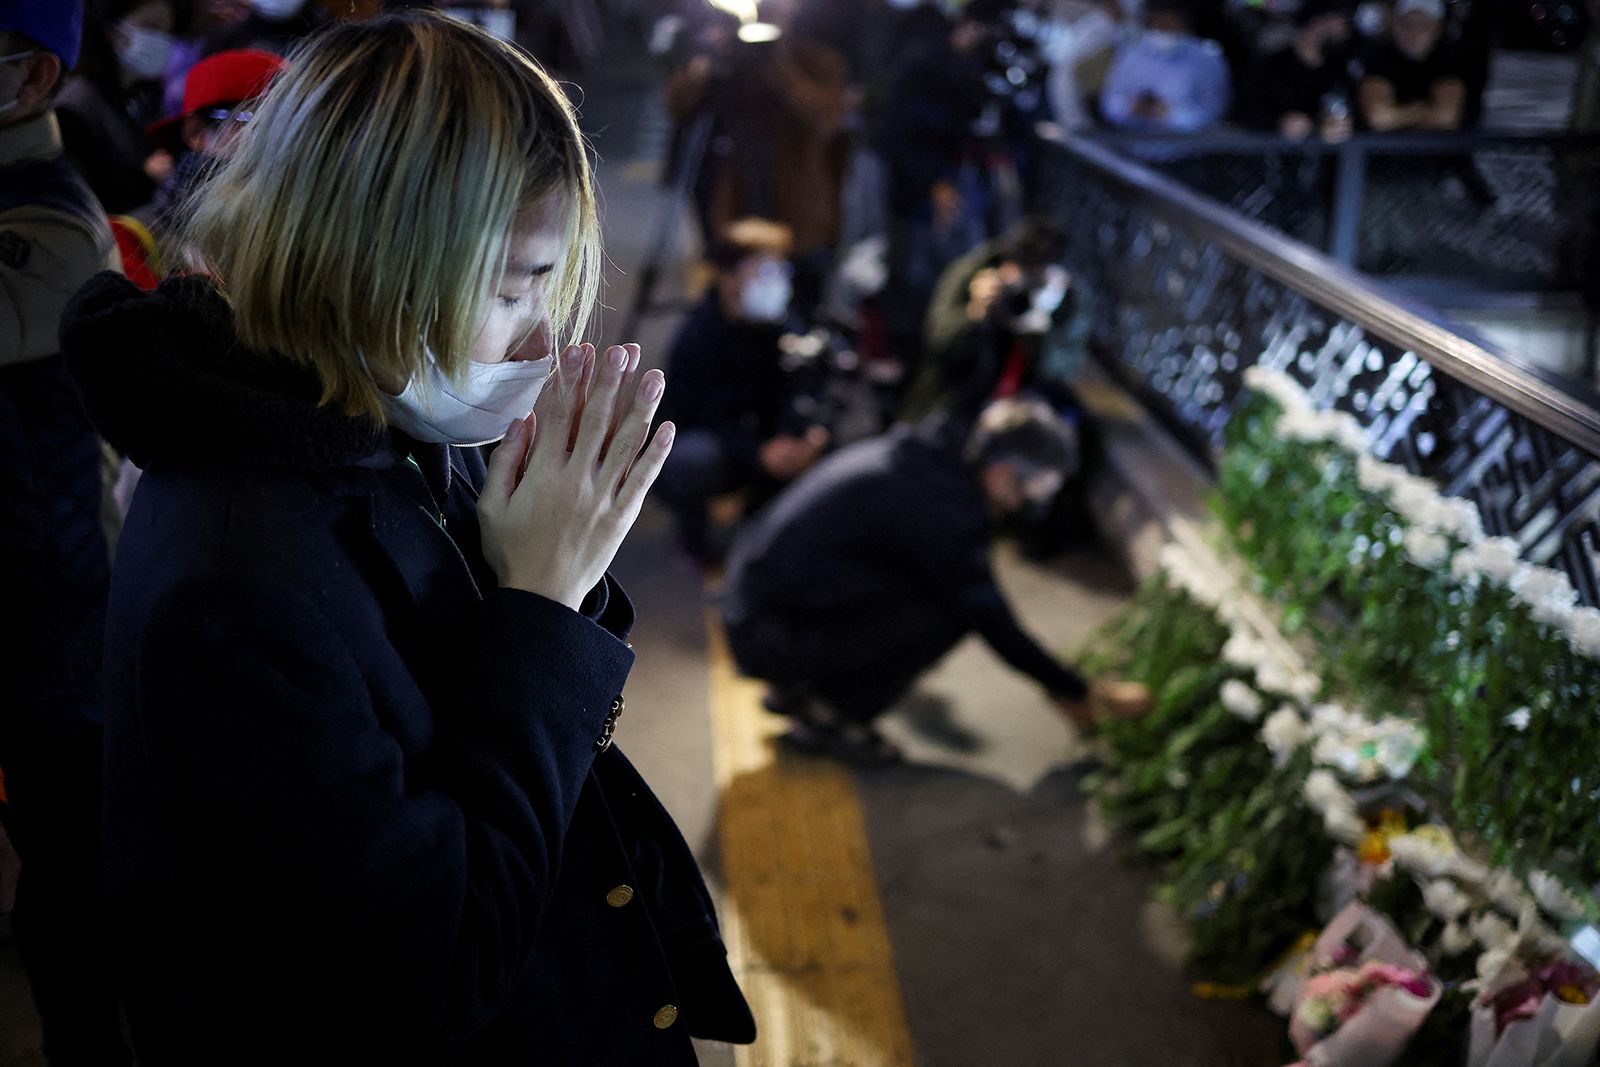 Lee Ji Han, K-pop singer, killed in Seoul crowd crush | CNN